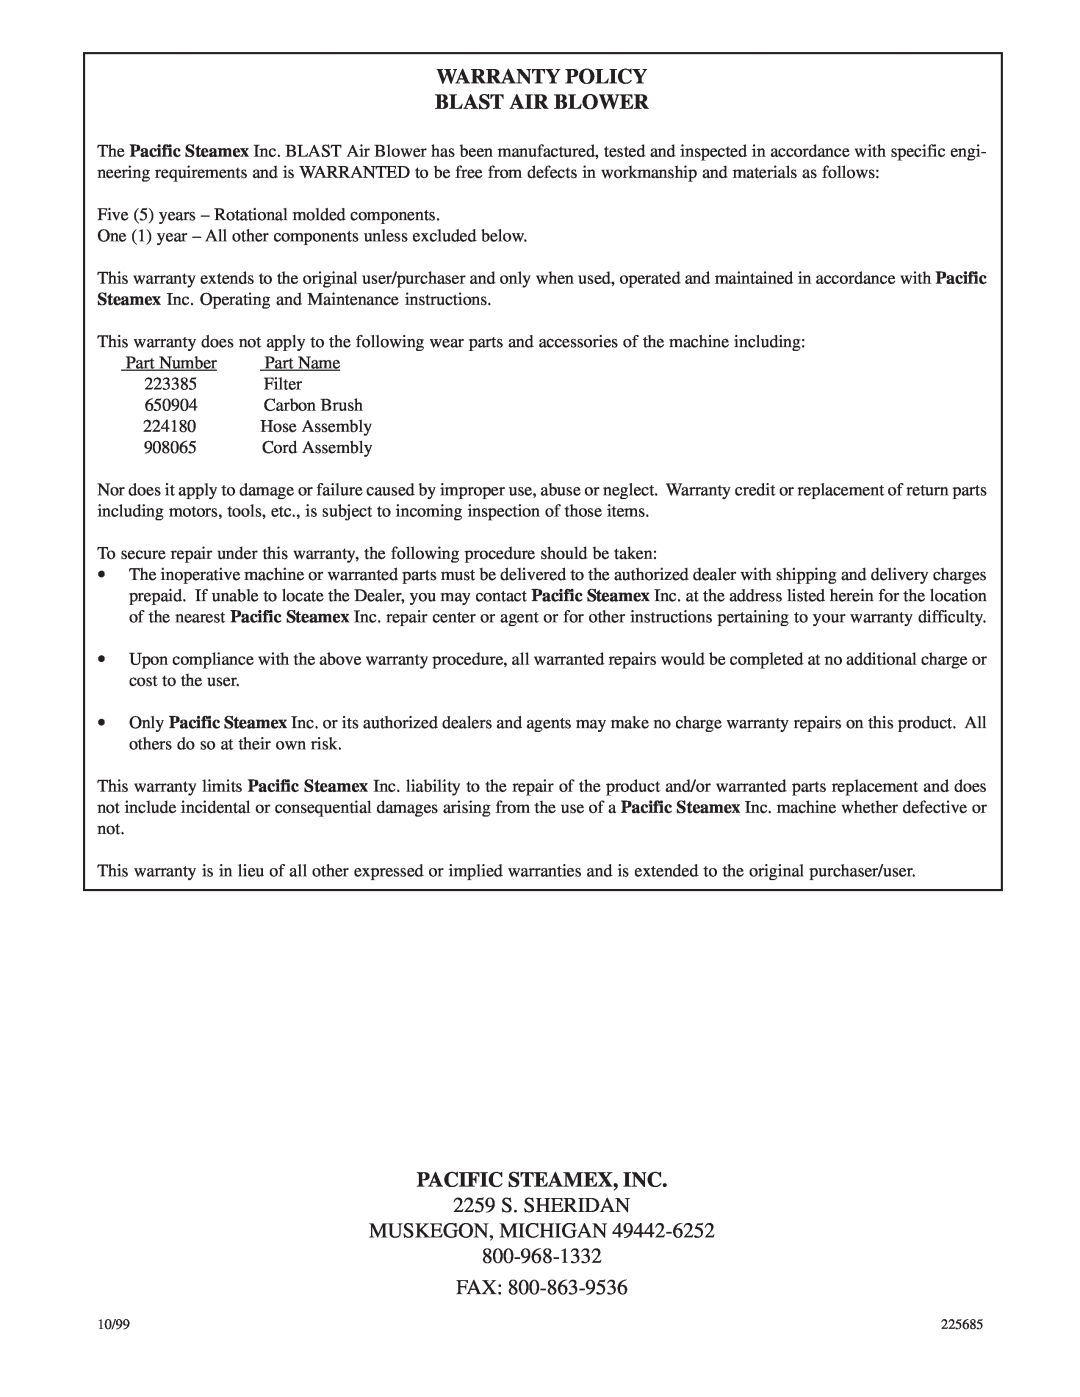 Sharp AIR BLOWER manual Warranty Policy Blast Air Blower, Pacific Steamex, Inc, 2259 S. SHERIDAN MUSKEGON, MICHIGAN, Fax 